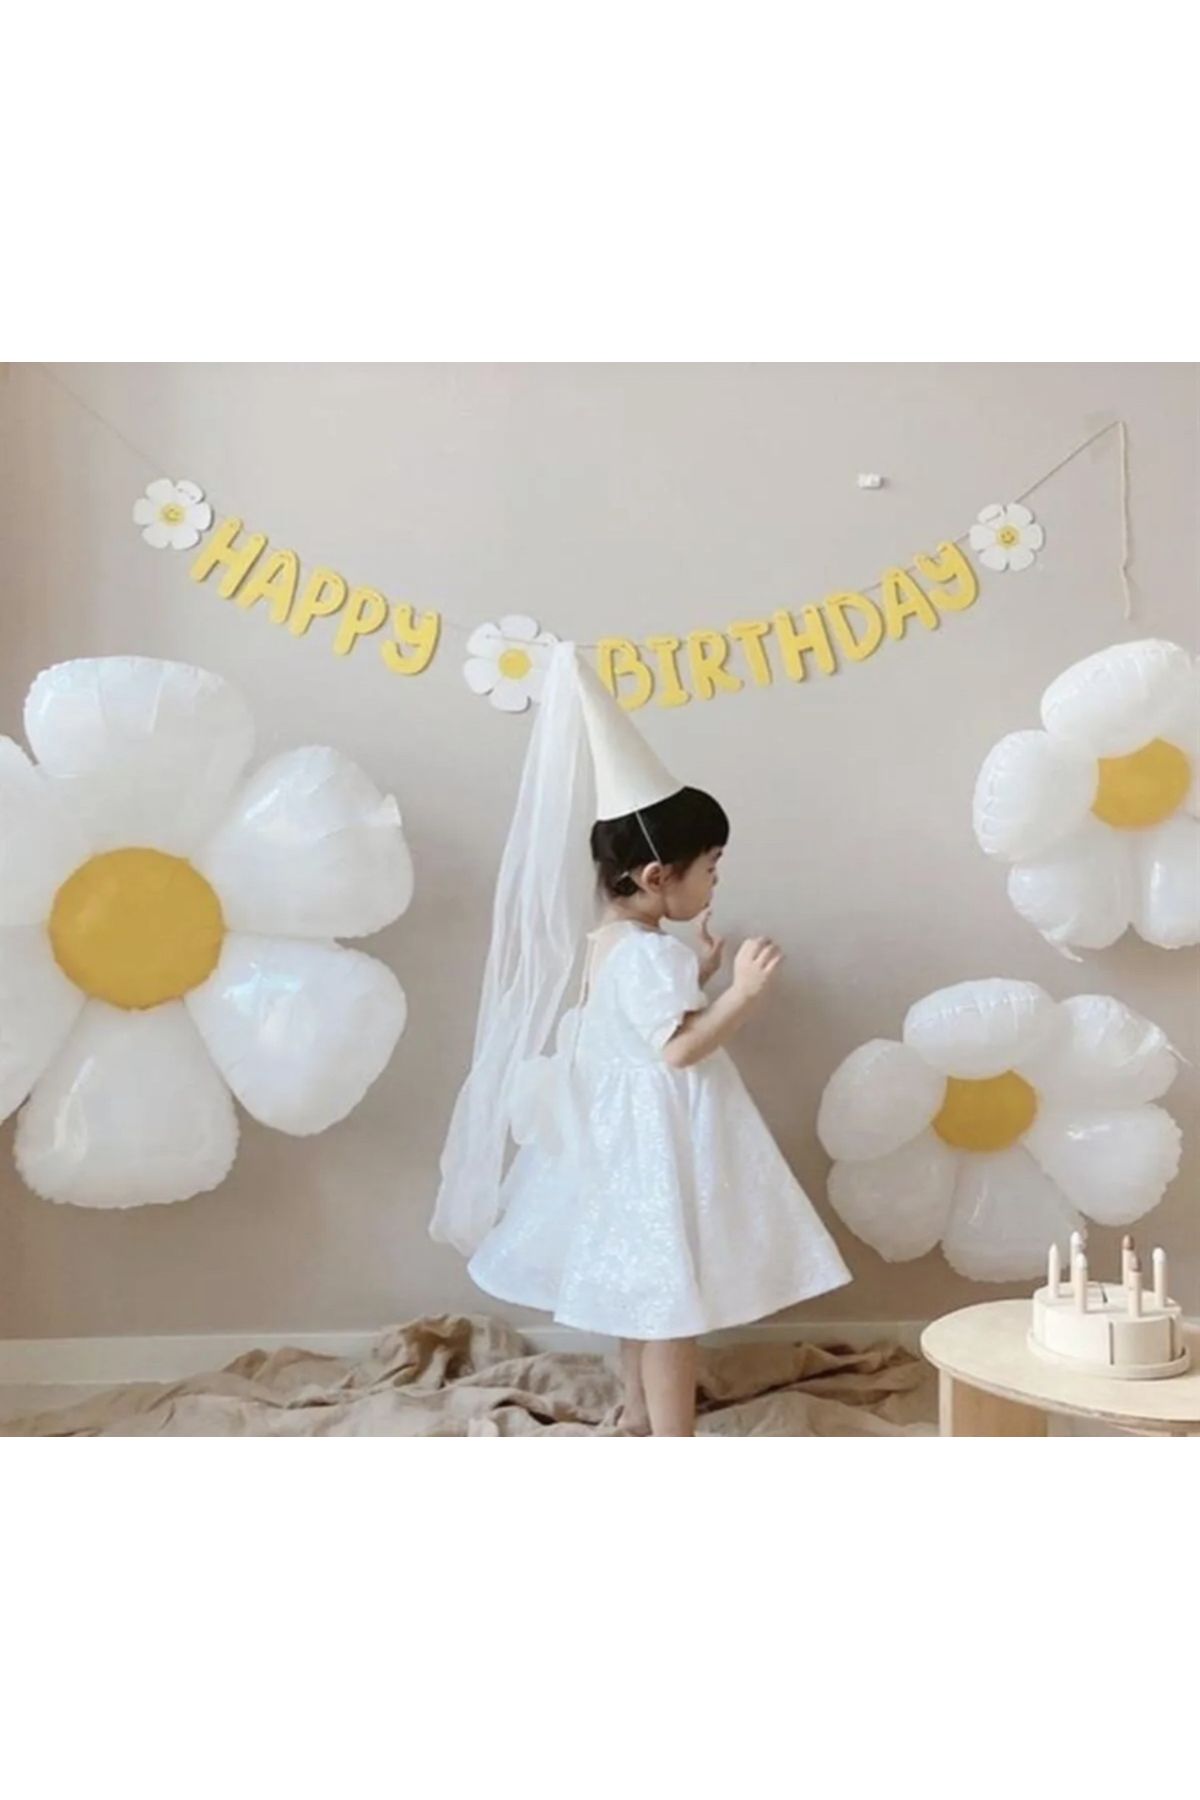 Çemrek Süs Parti Papatya Temalı Doğum Günü seti happy birthday yazısı ve 3 adet folyo papatya balon